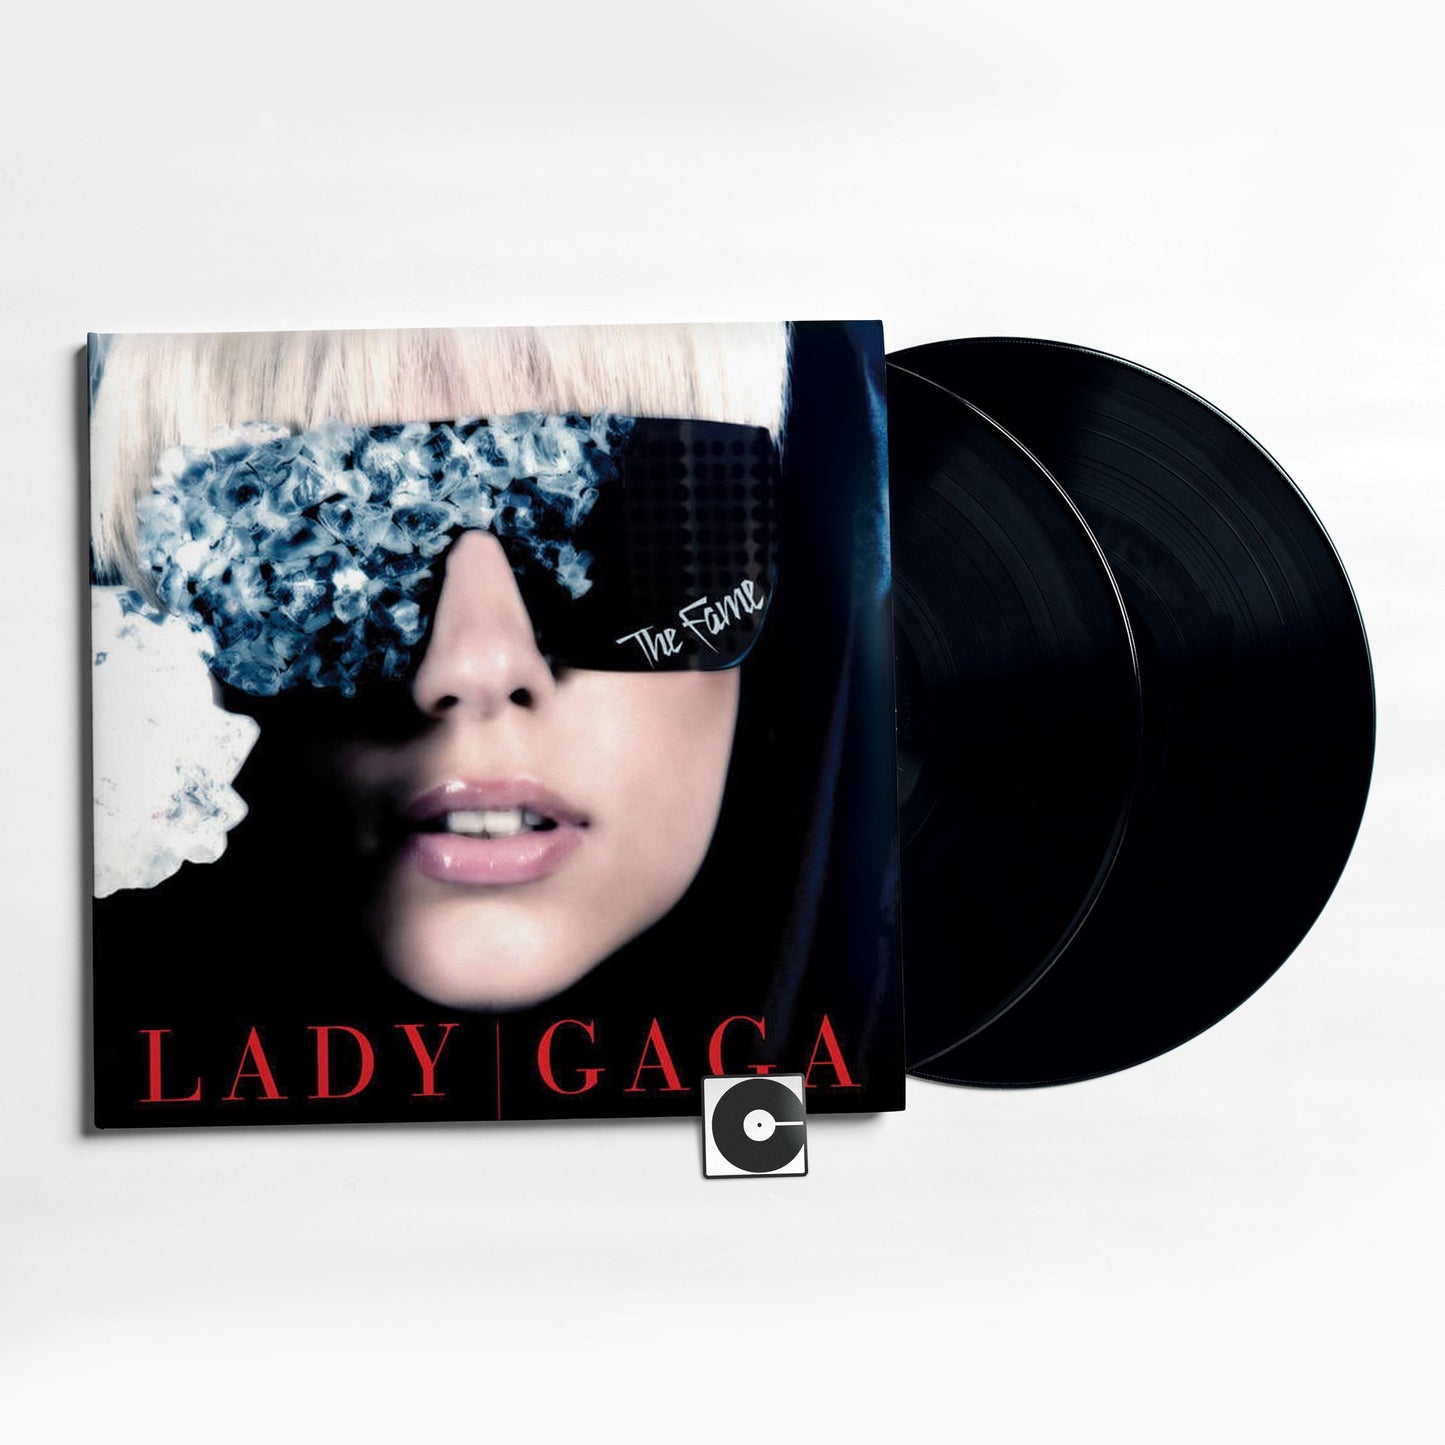 Lady Gaga - "The Fame"